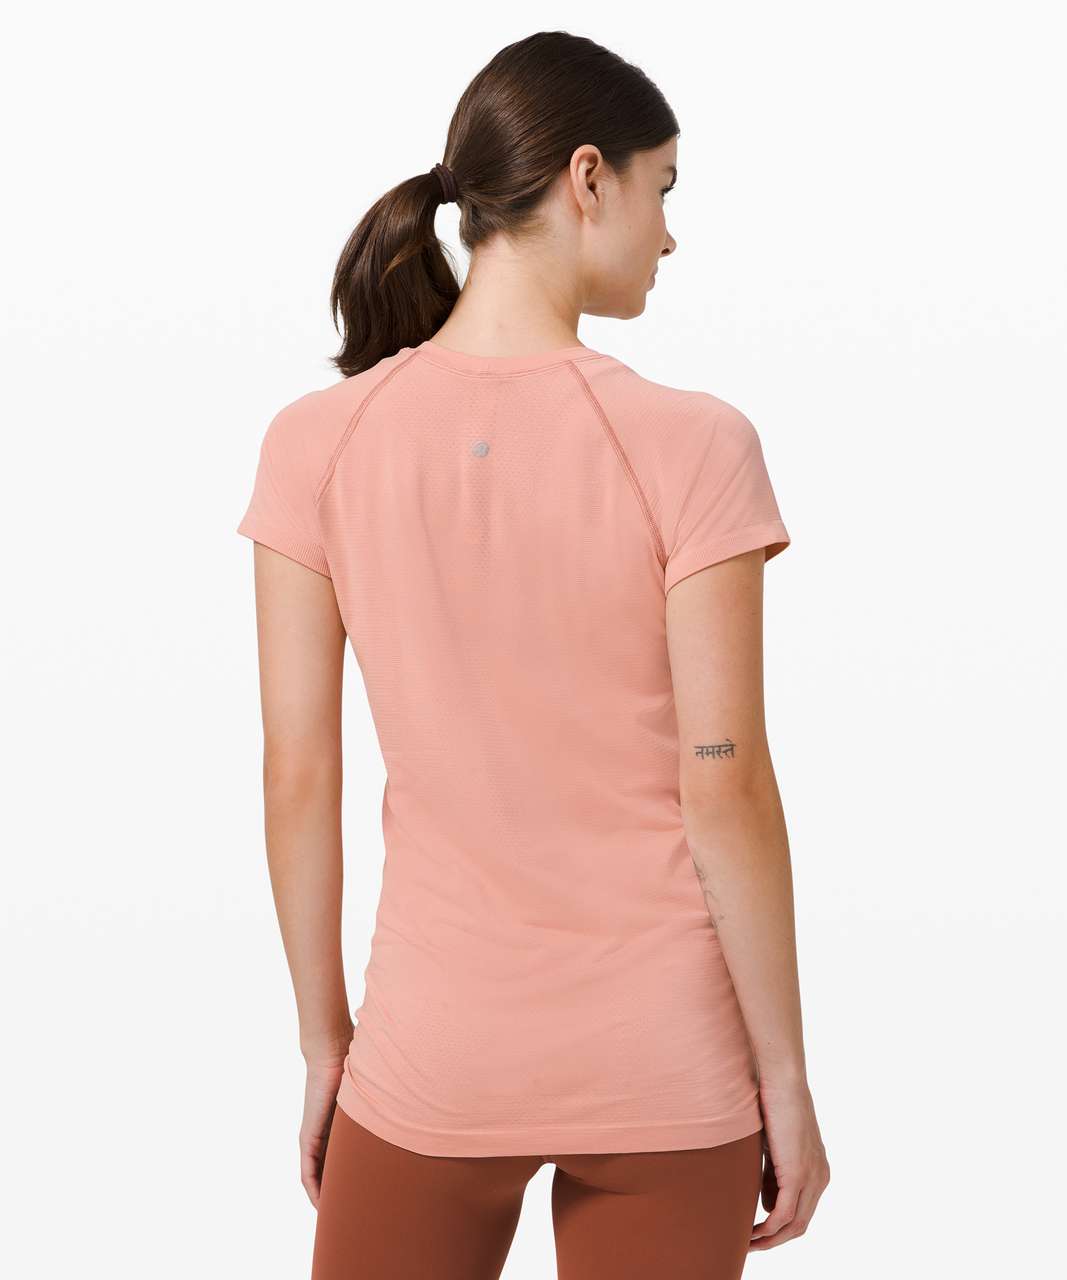 Lululemon Swiftly Tech Short Sleeve 2.0 - Pink Pastel / Pink Pastel